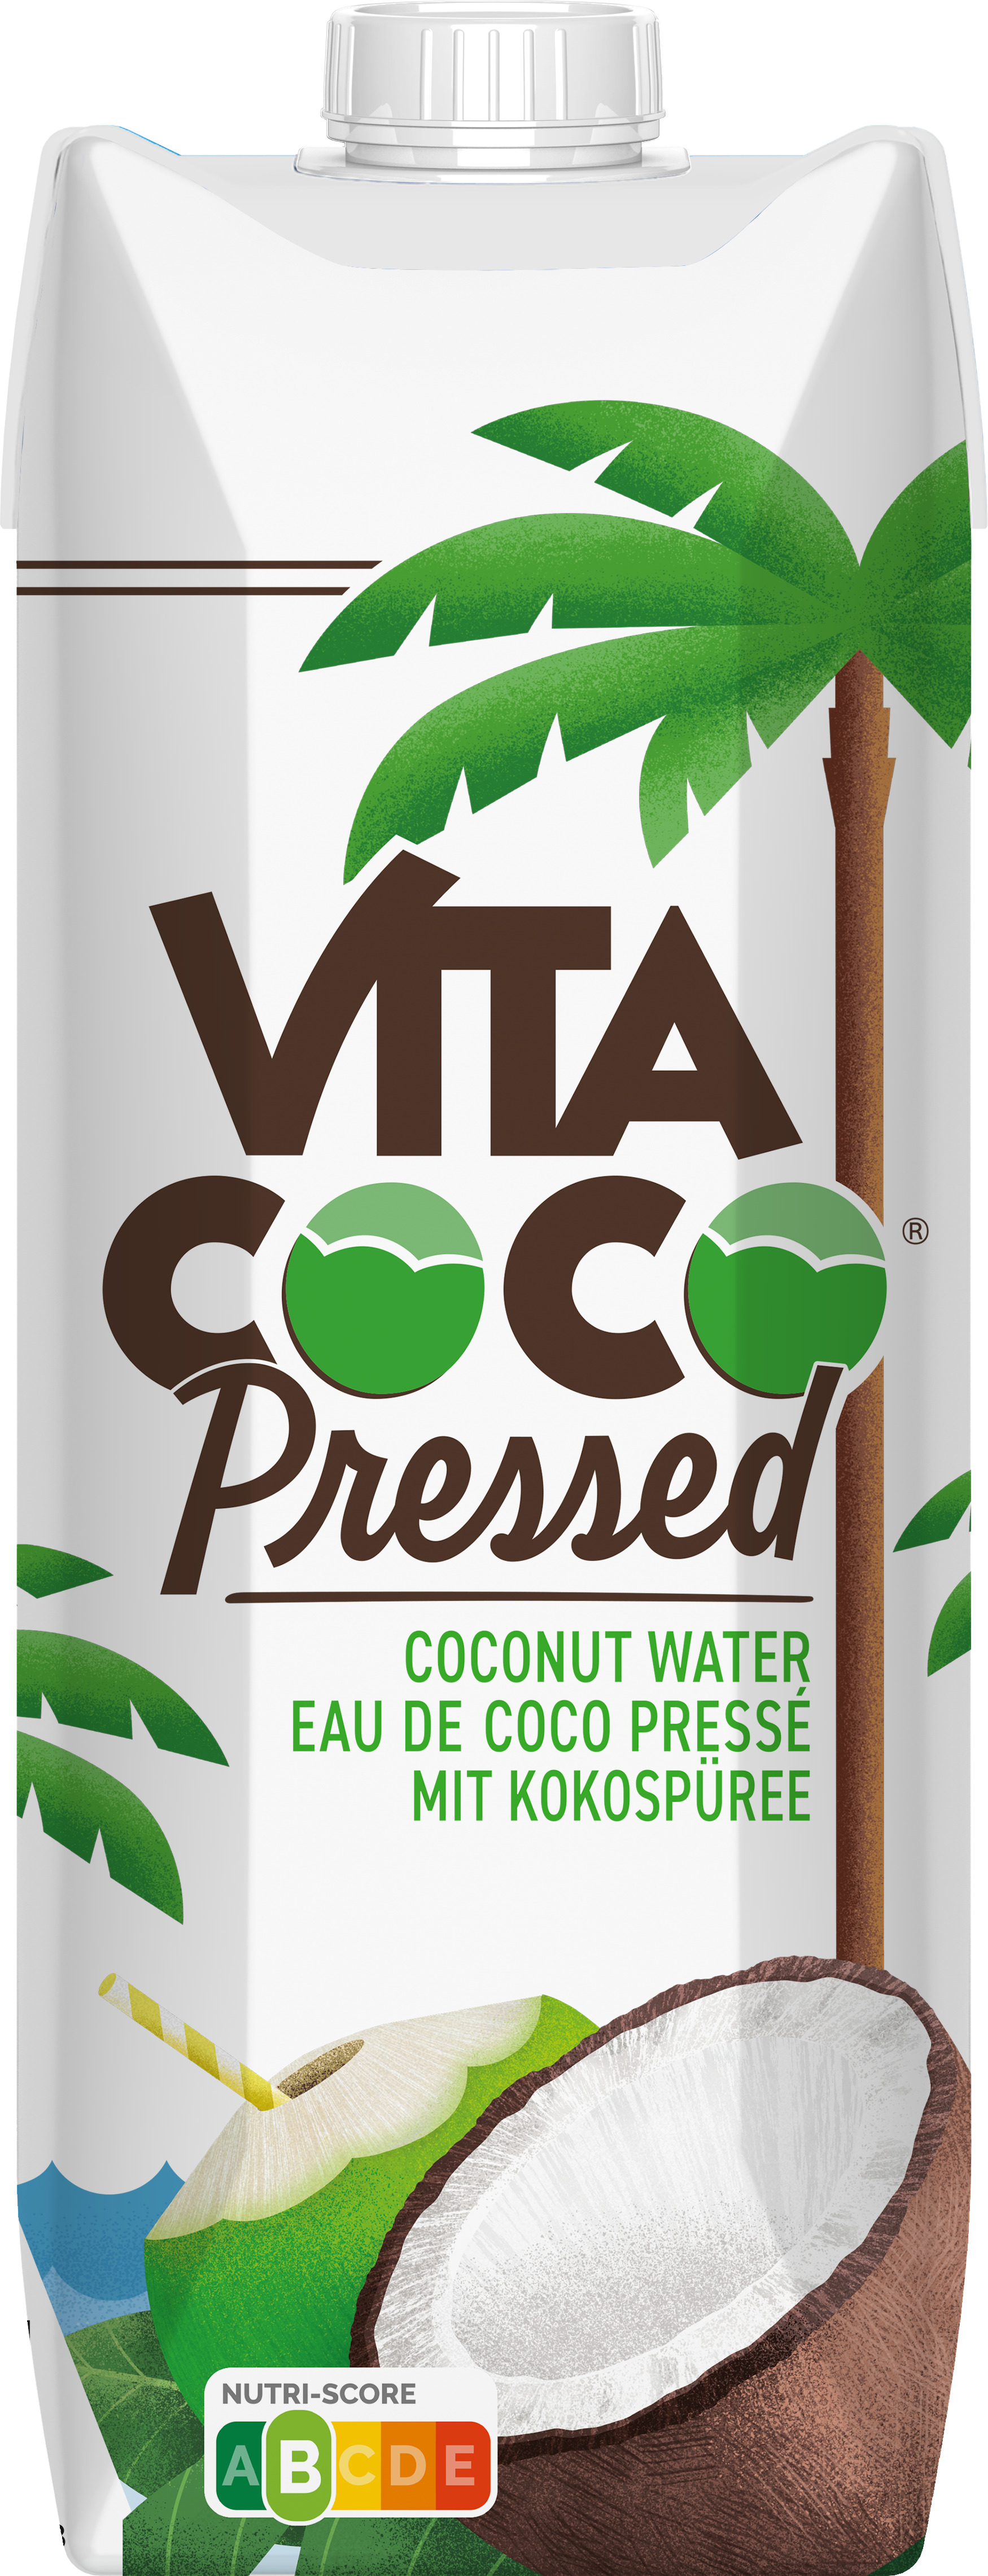 Köp VITA COCO Pressed Coconut Water 1 liter